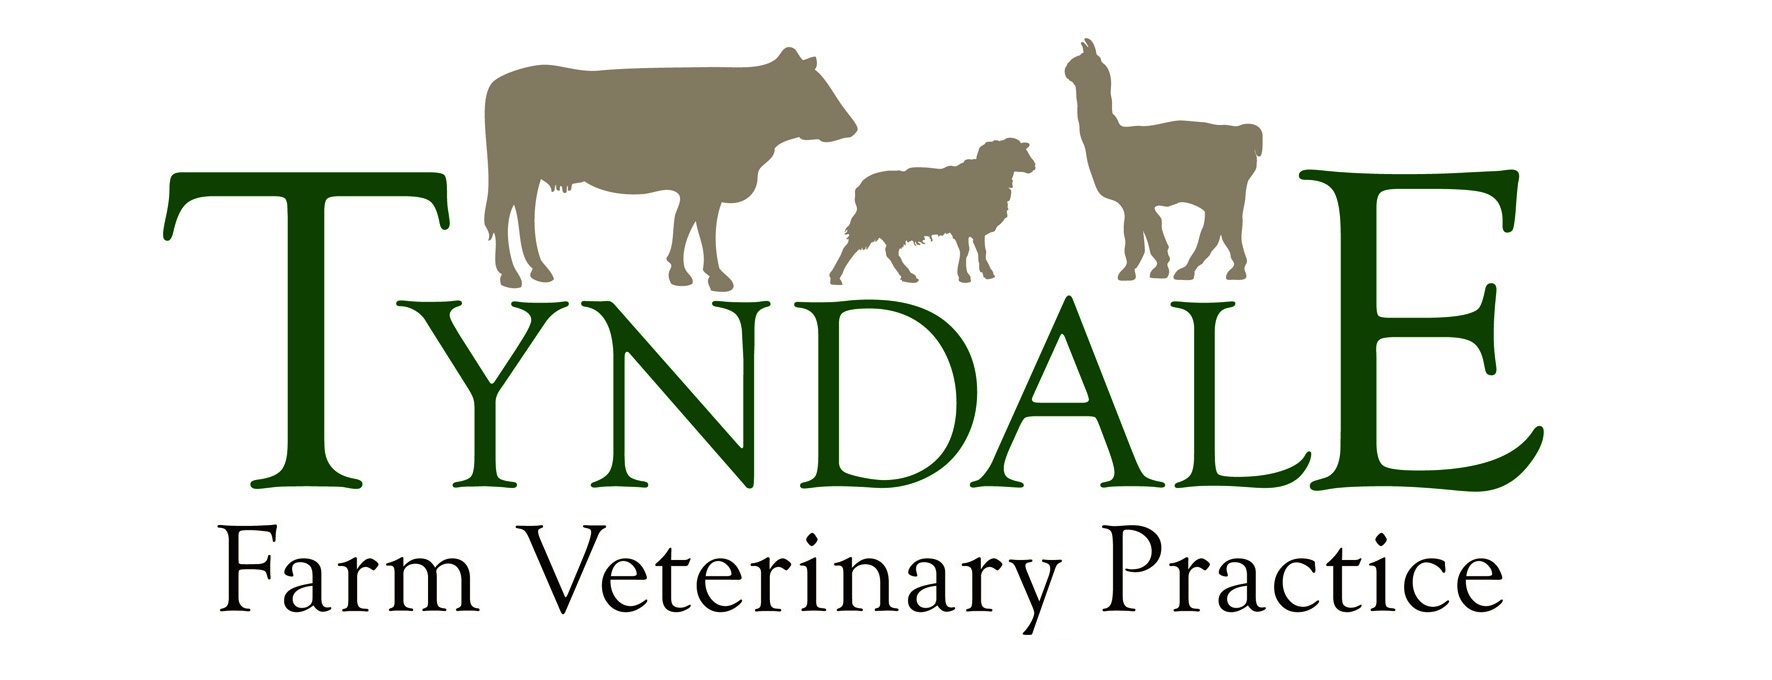 Tyndale Farm Veterinary Logo.jpg